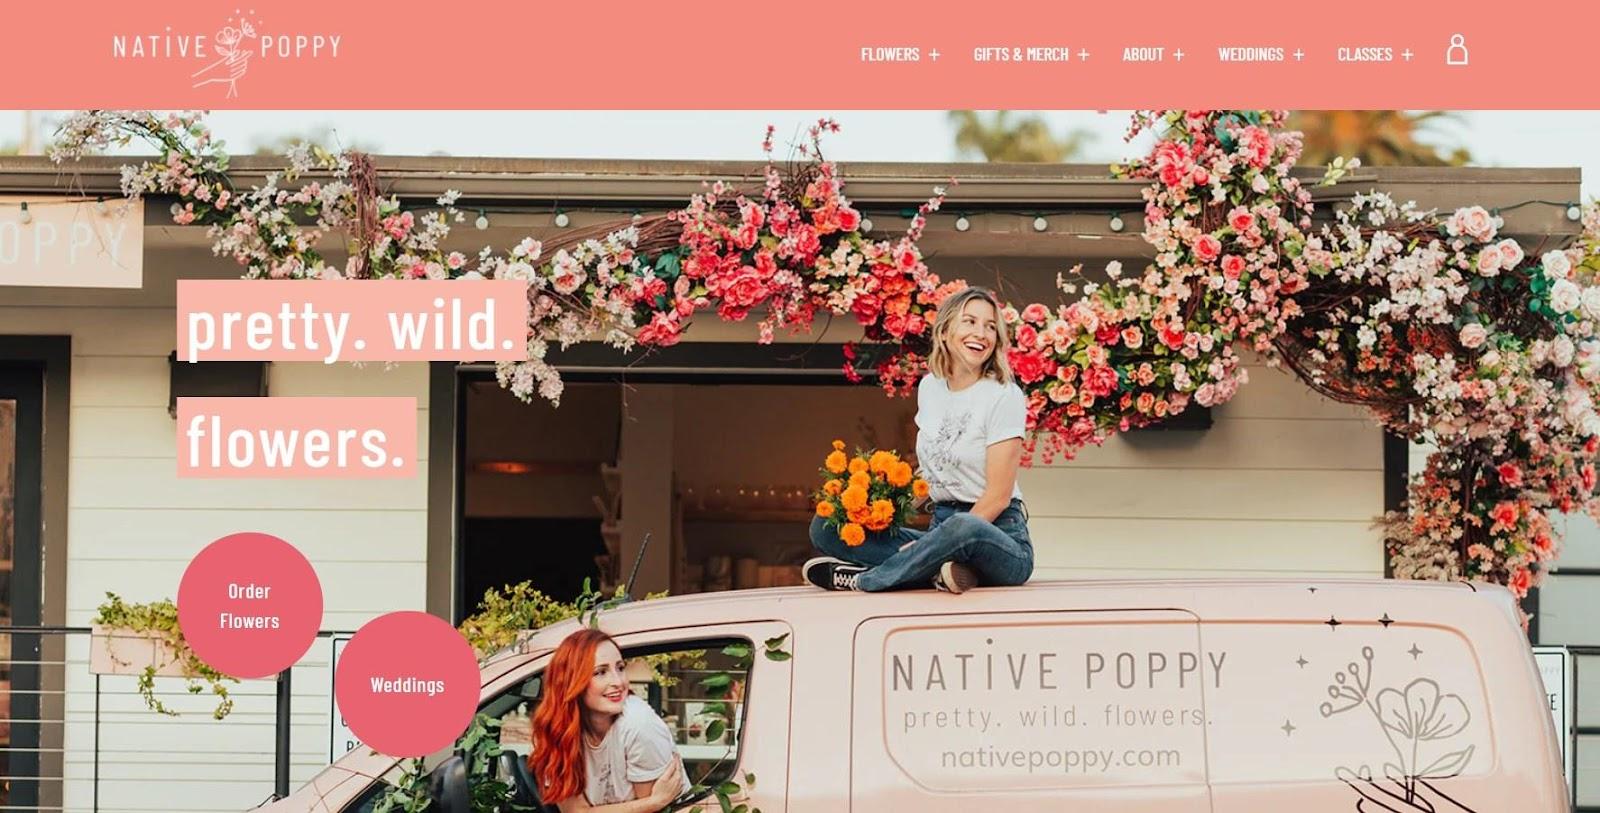 Best florist websites — design example from Native Poppy.